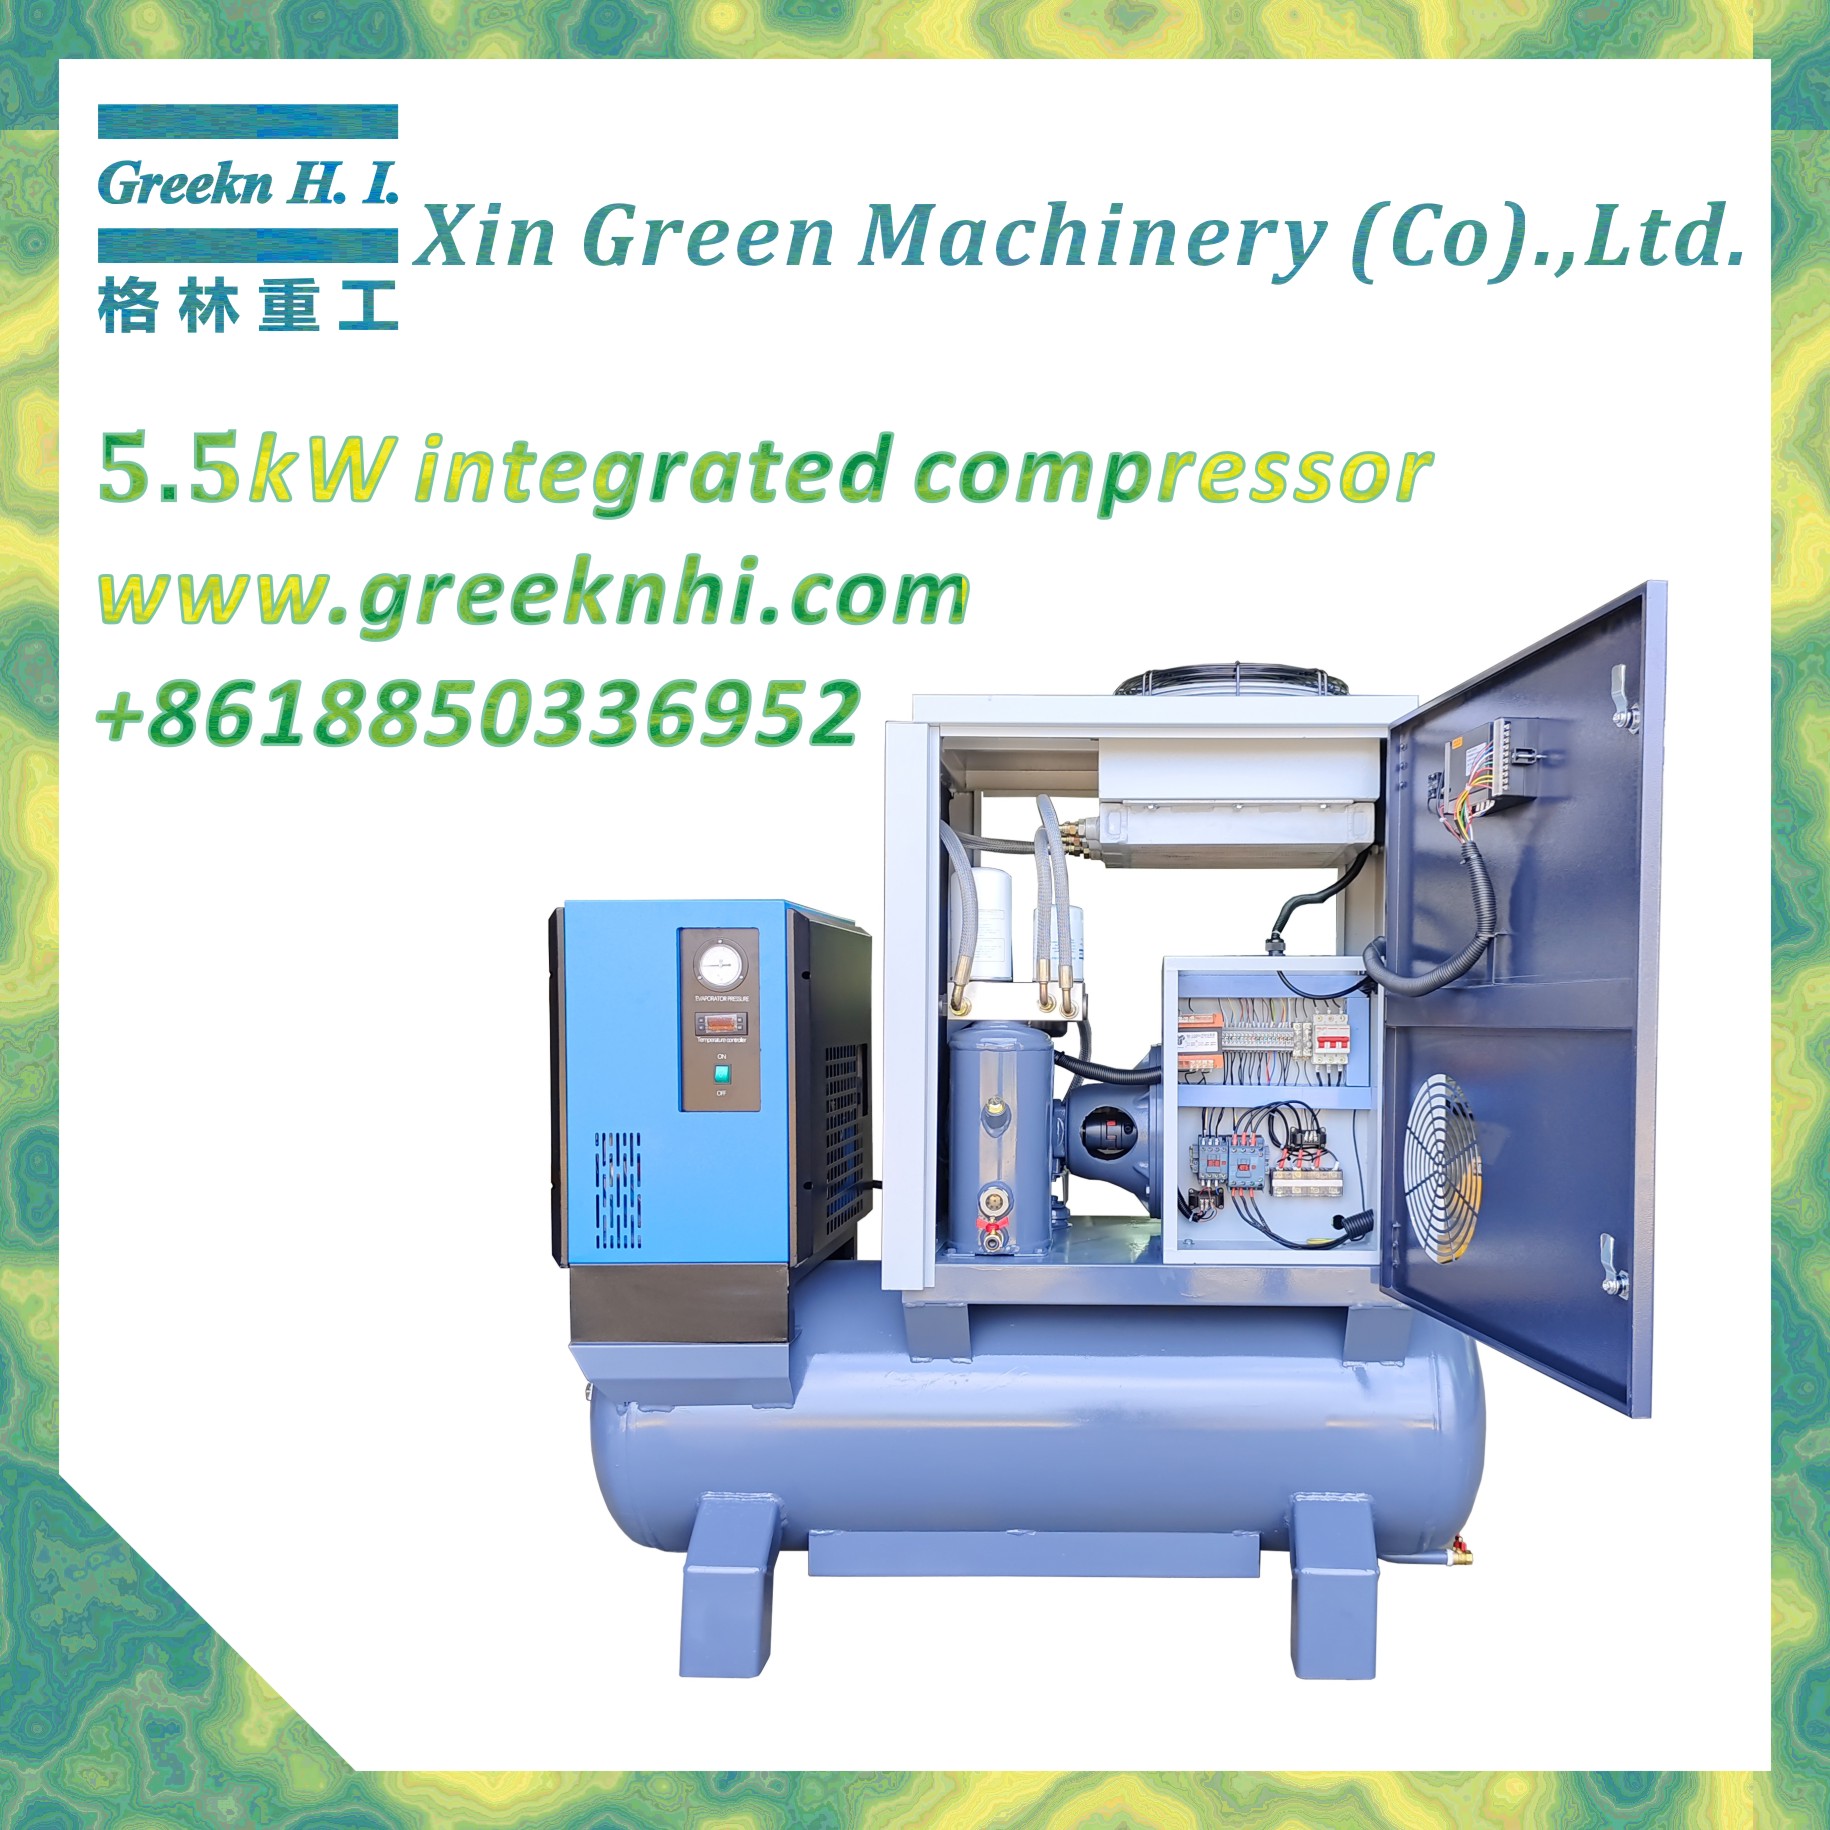 Greeknhi fixed speed air compressor GA5T 5.5kw integrated type screw air compressor